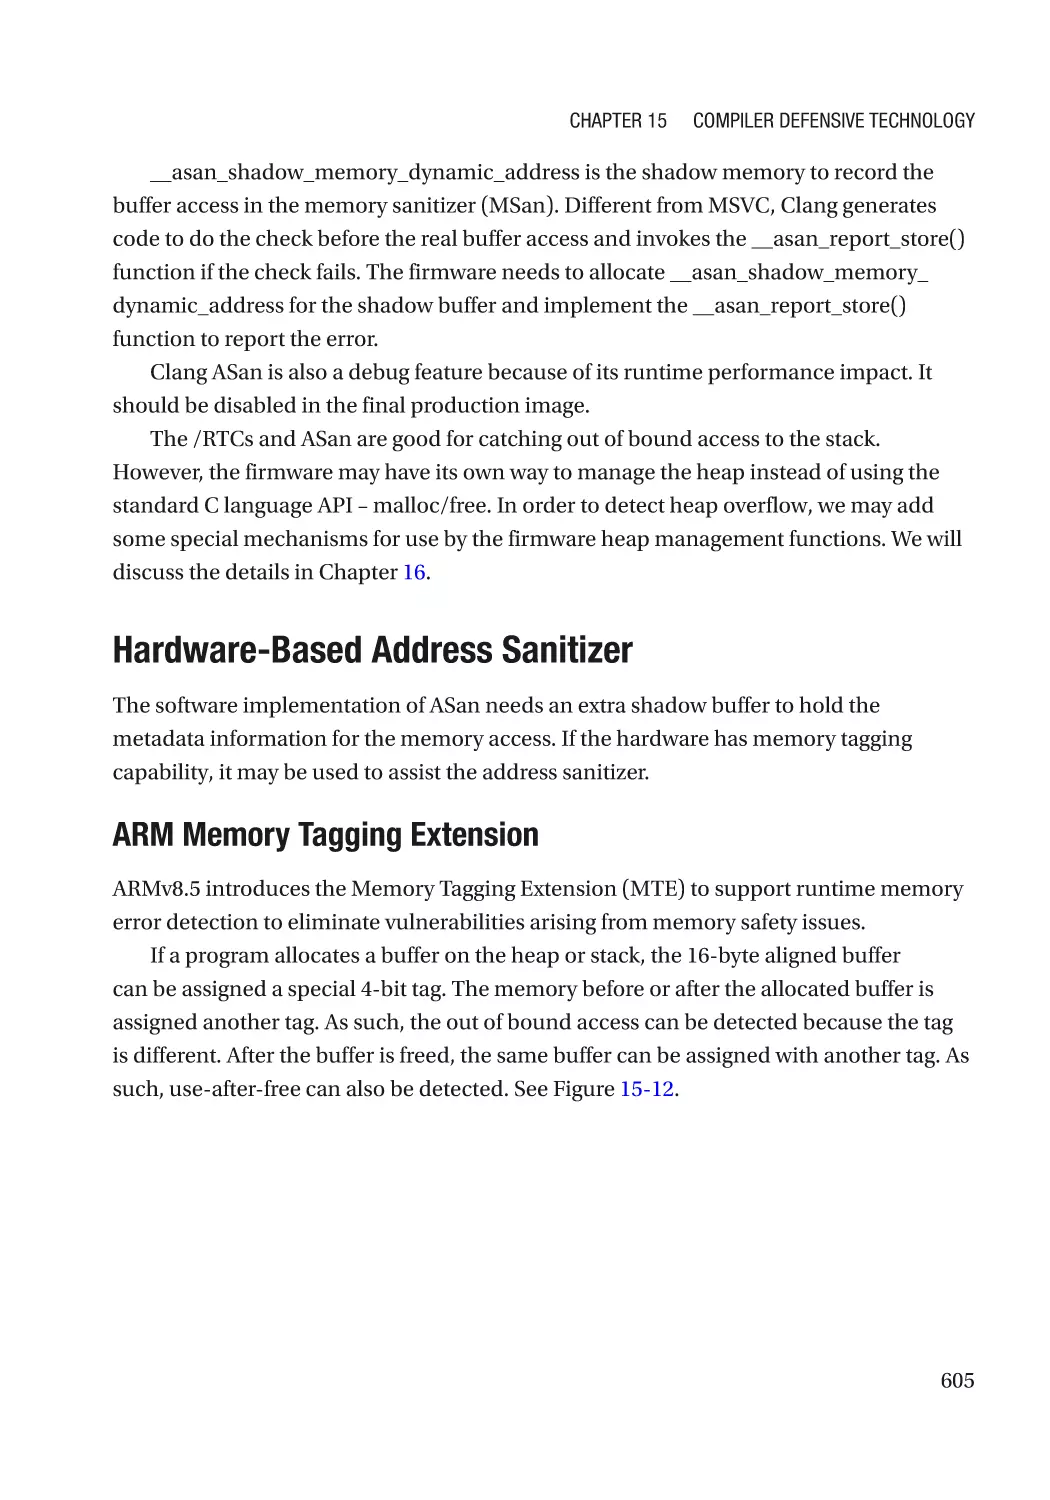 Hardware-Based Address Sanitizer
ARM Memory Tagging Extension